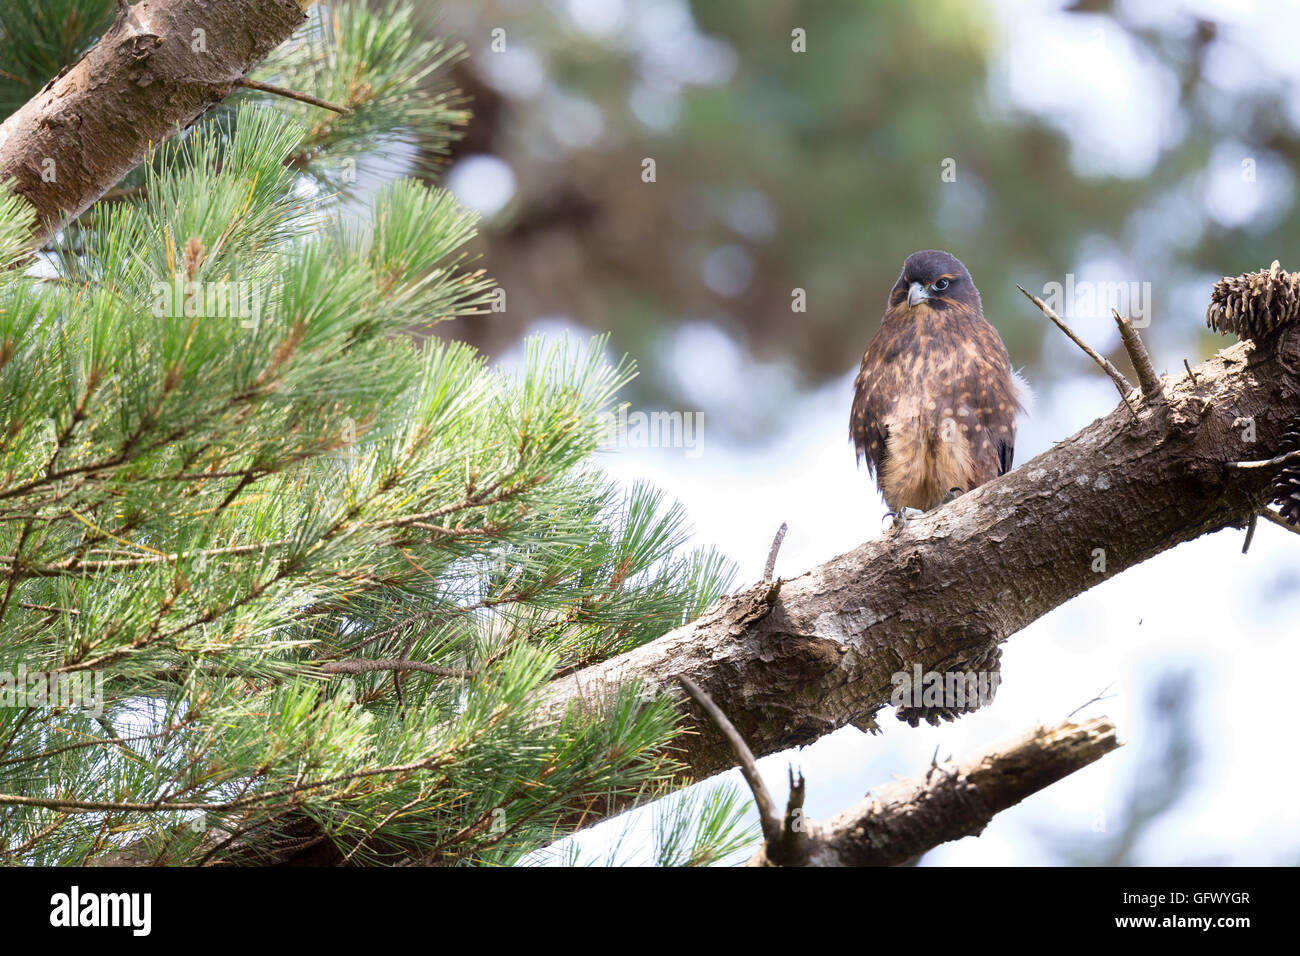 Nuova Zelanda falcon o kārearea (Falco novaeseelandiae) vicino a Wellington, Isola del nord Foto Stock